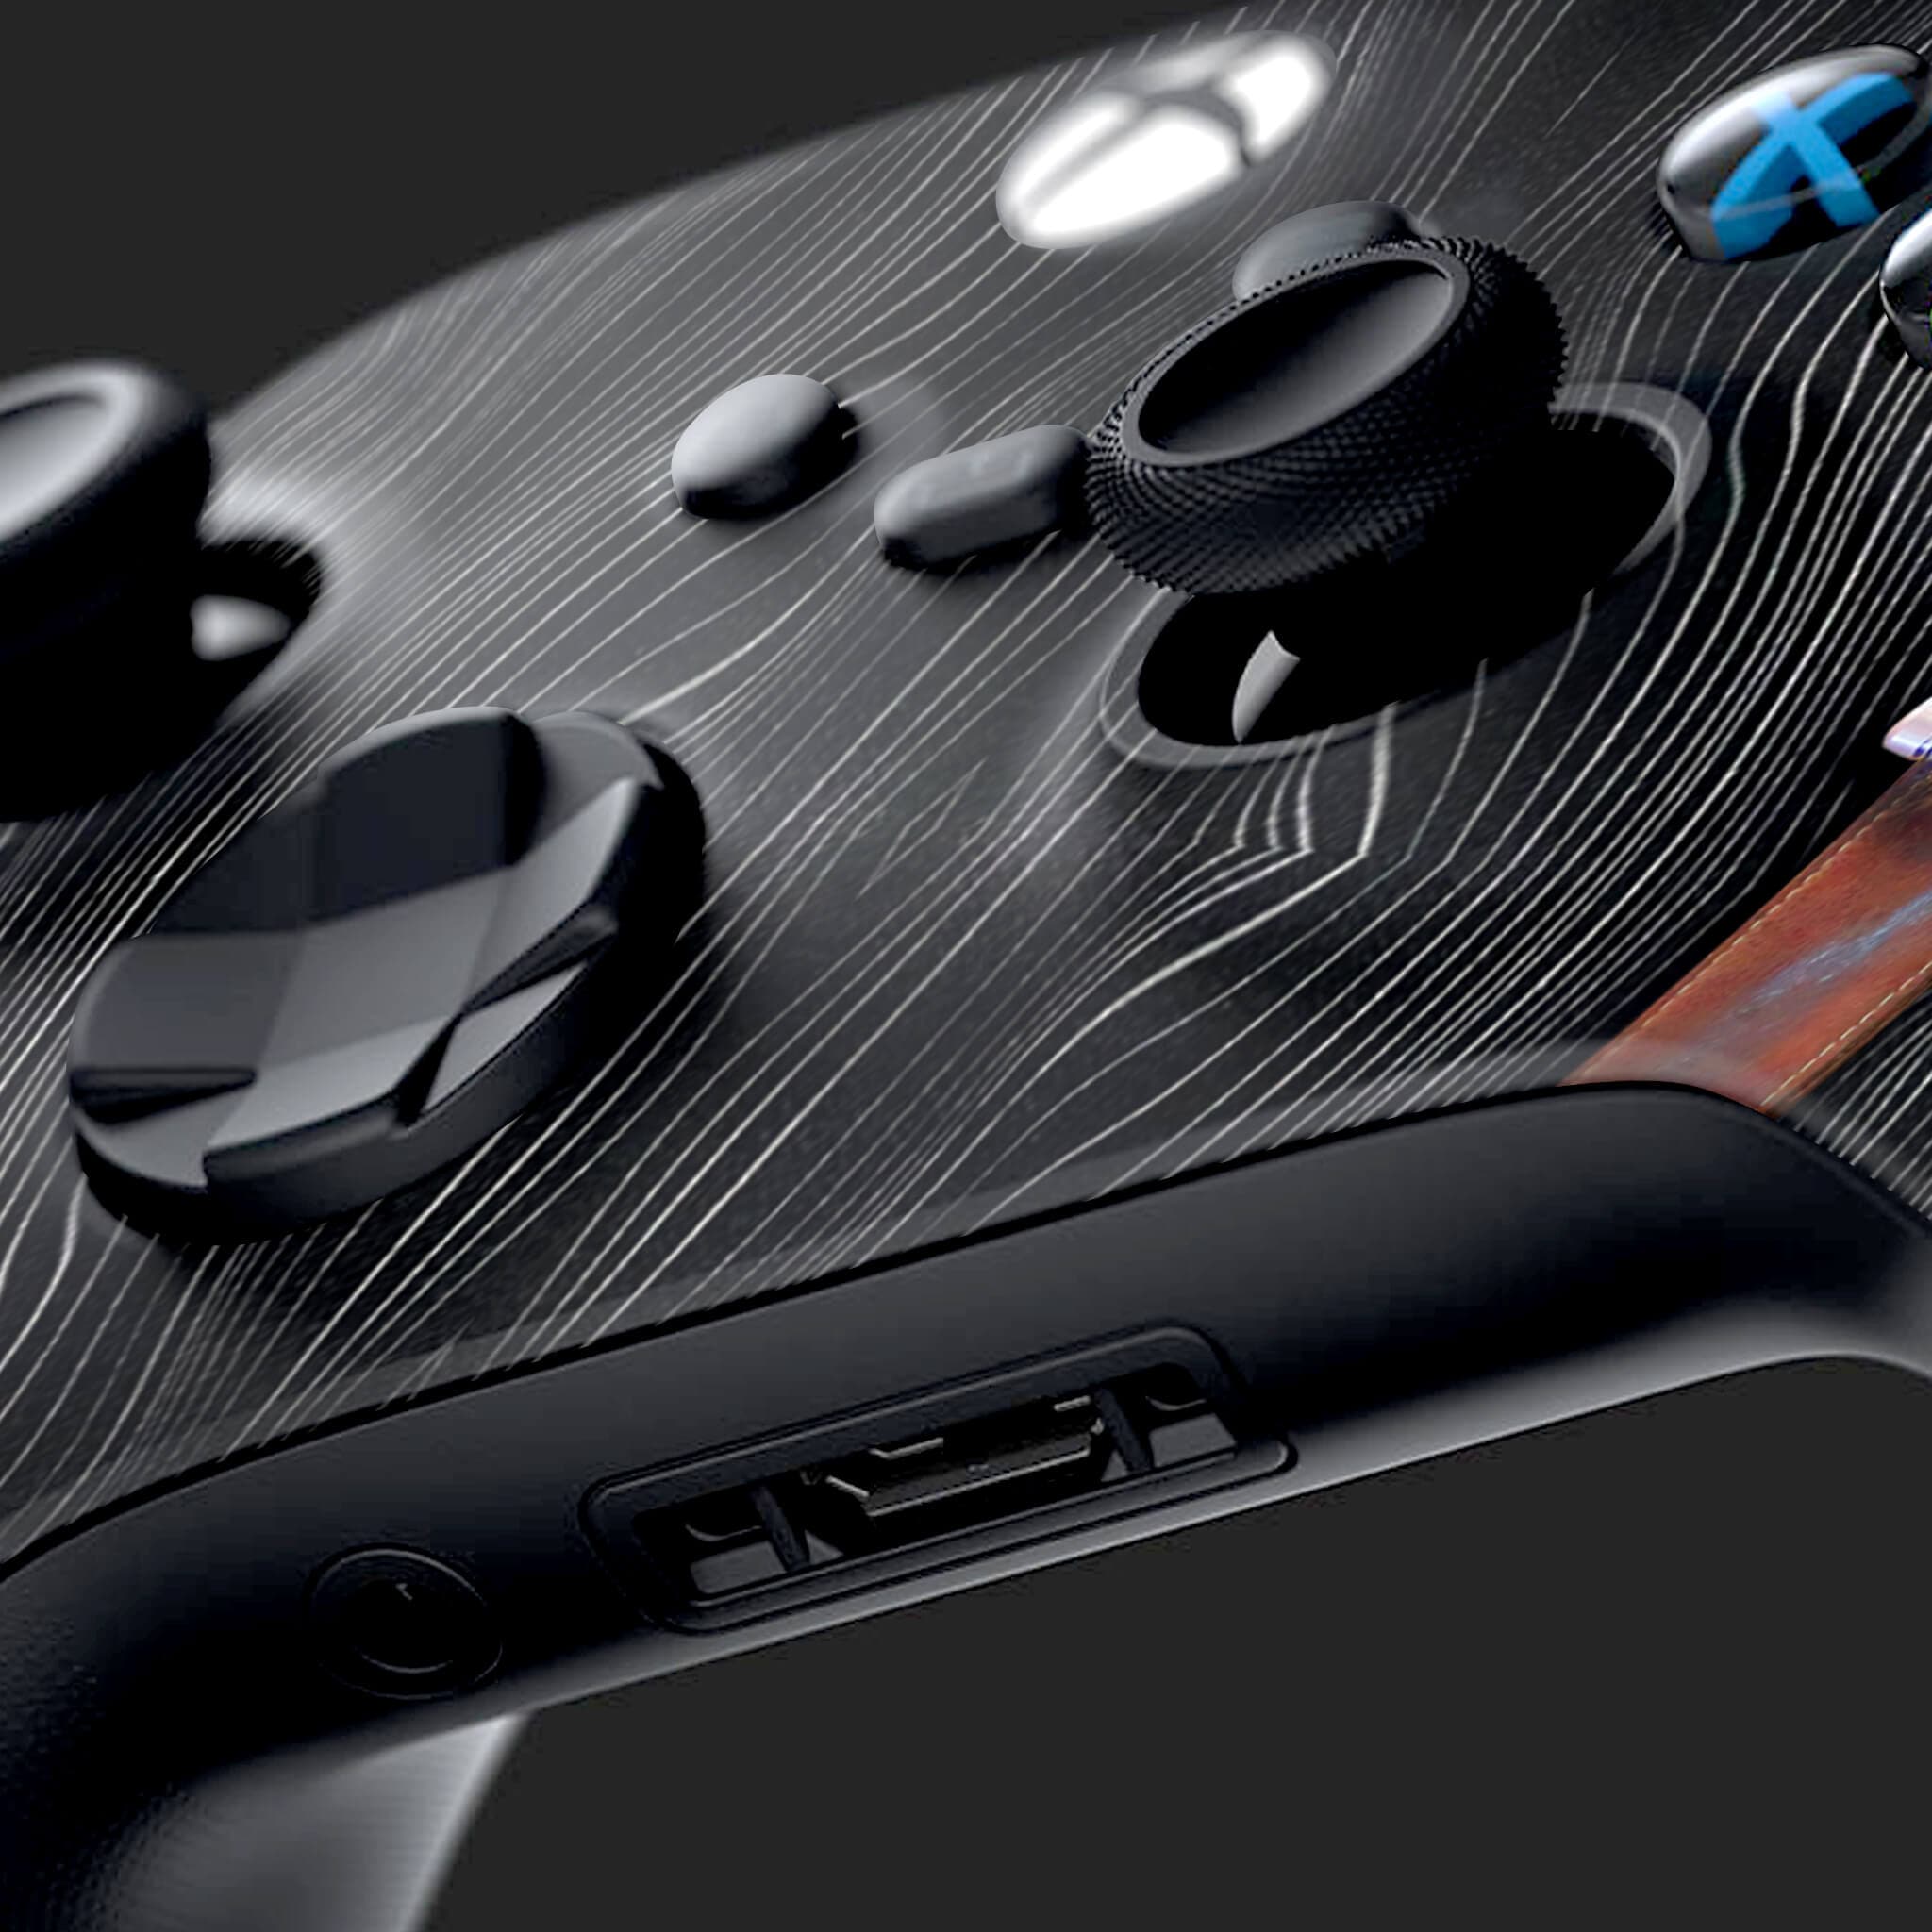 Buy Xbox Series X The Mando Inspired Controller